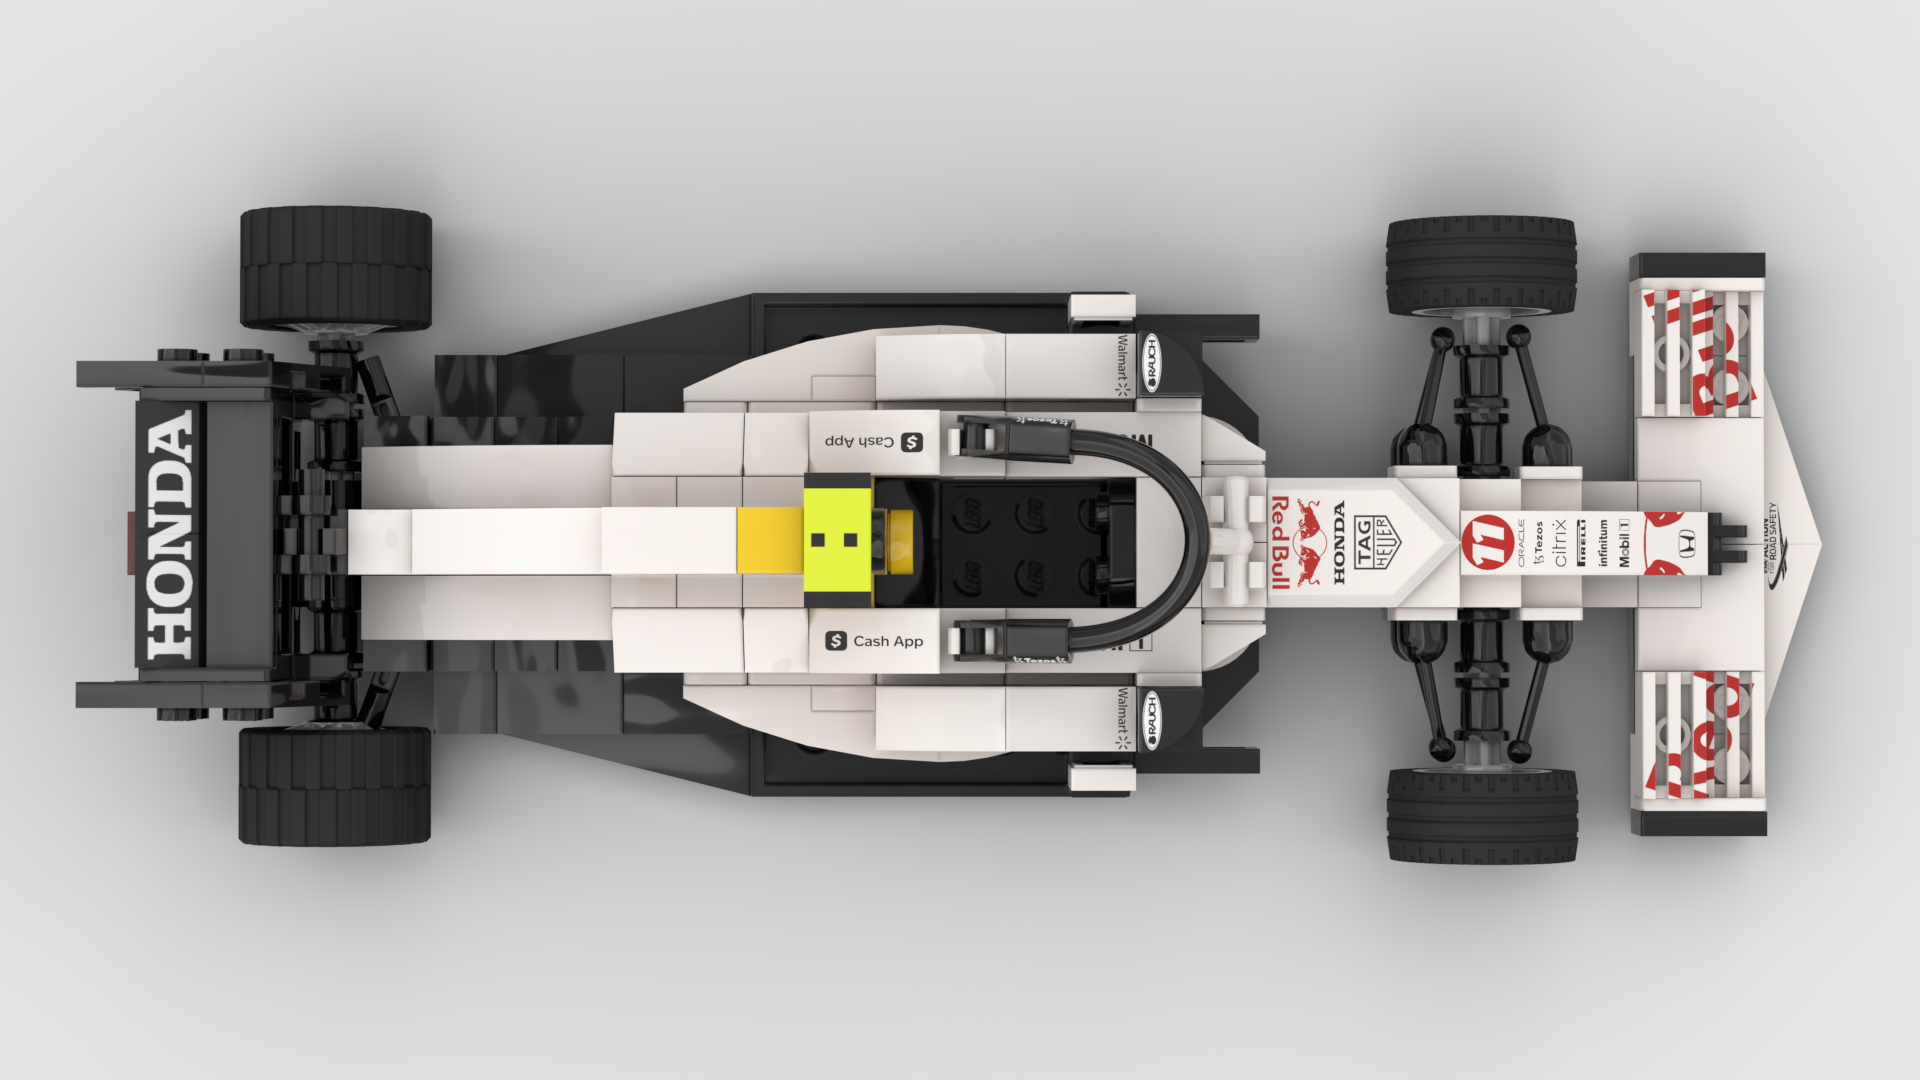 Oracle Red Bull Racing - The White Bull - Honda Livery - Turkish Grand Prix  - 2021 Art Print